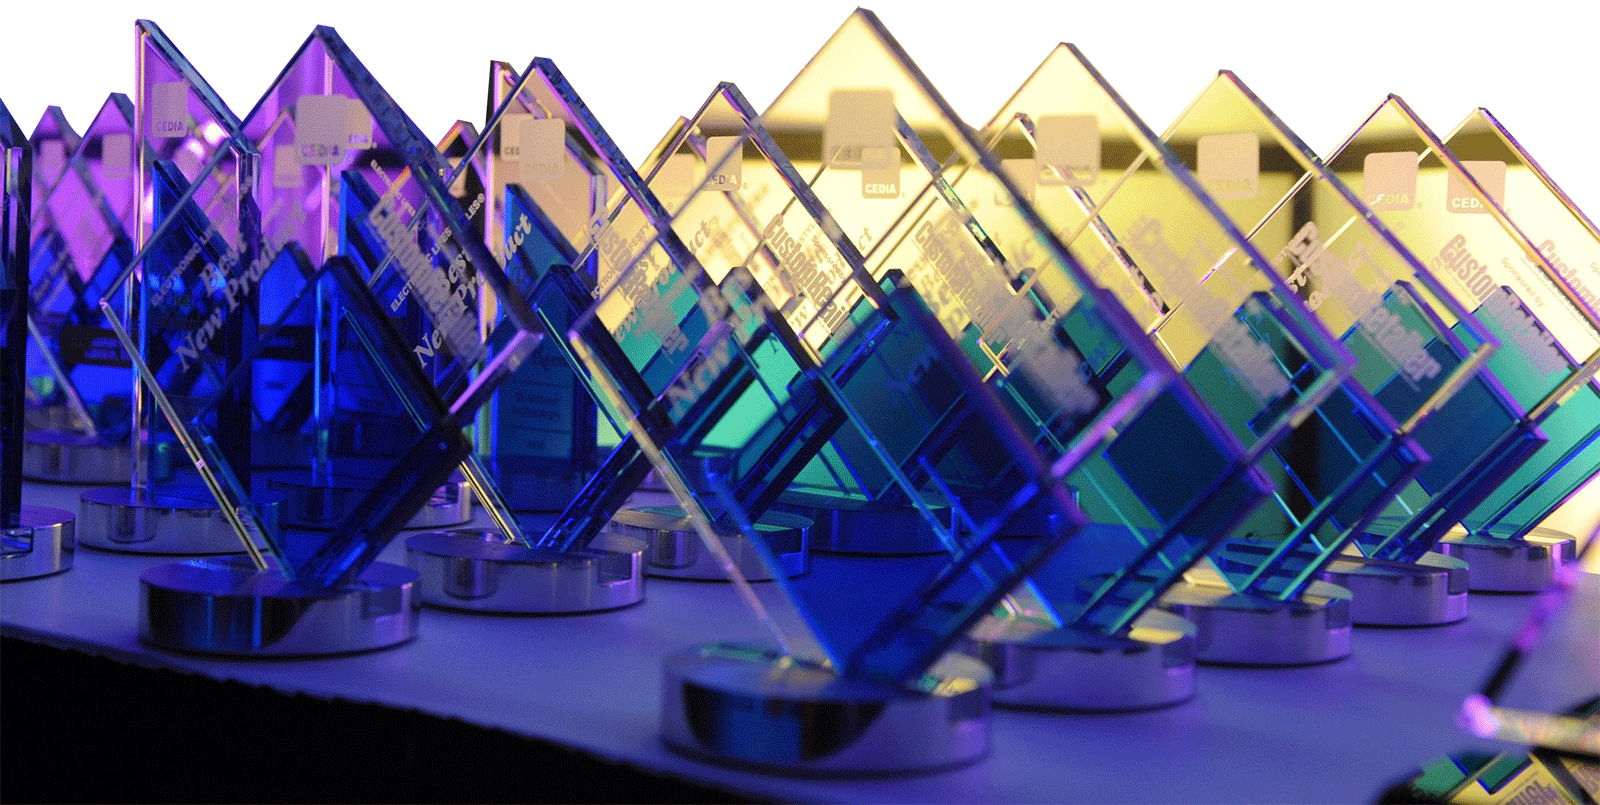 Awards Trophy Image